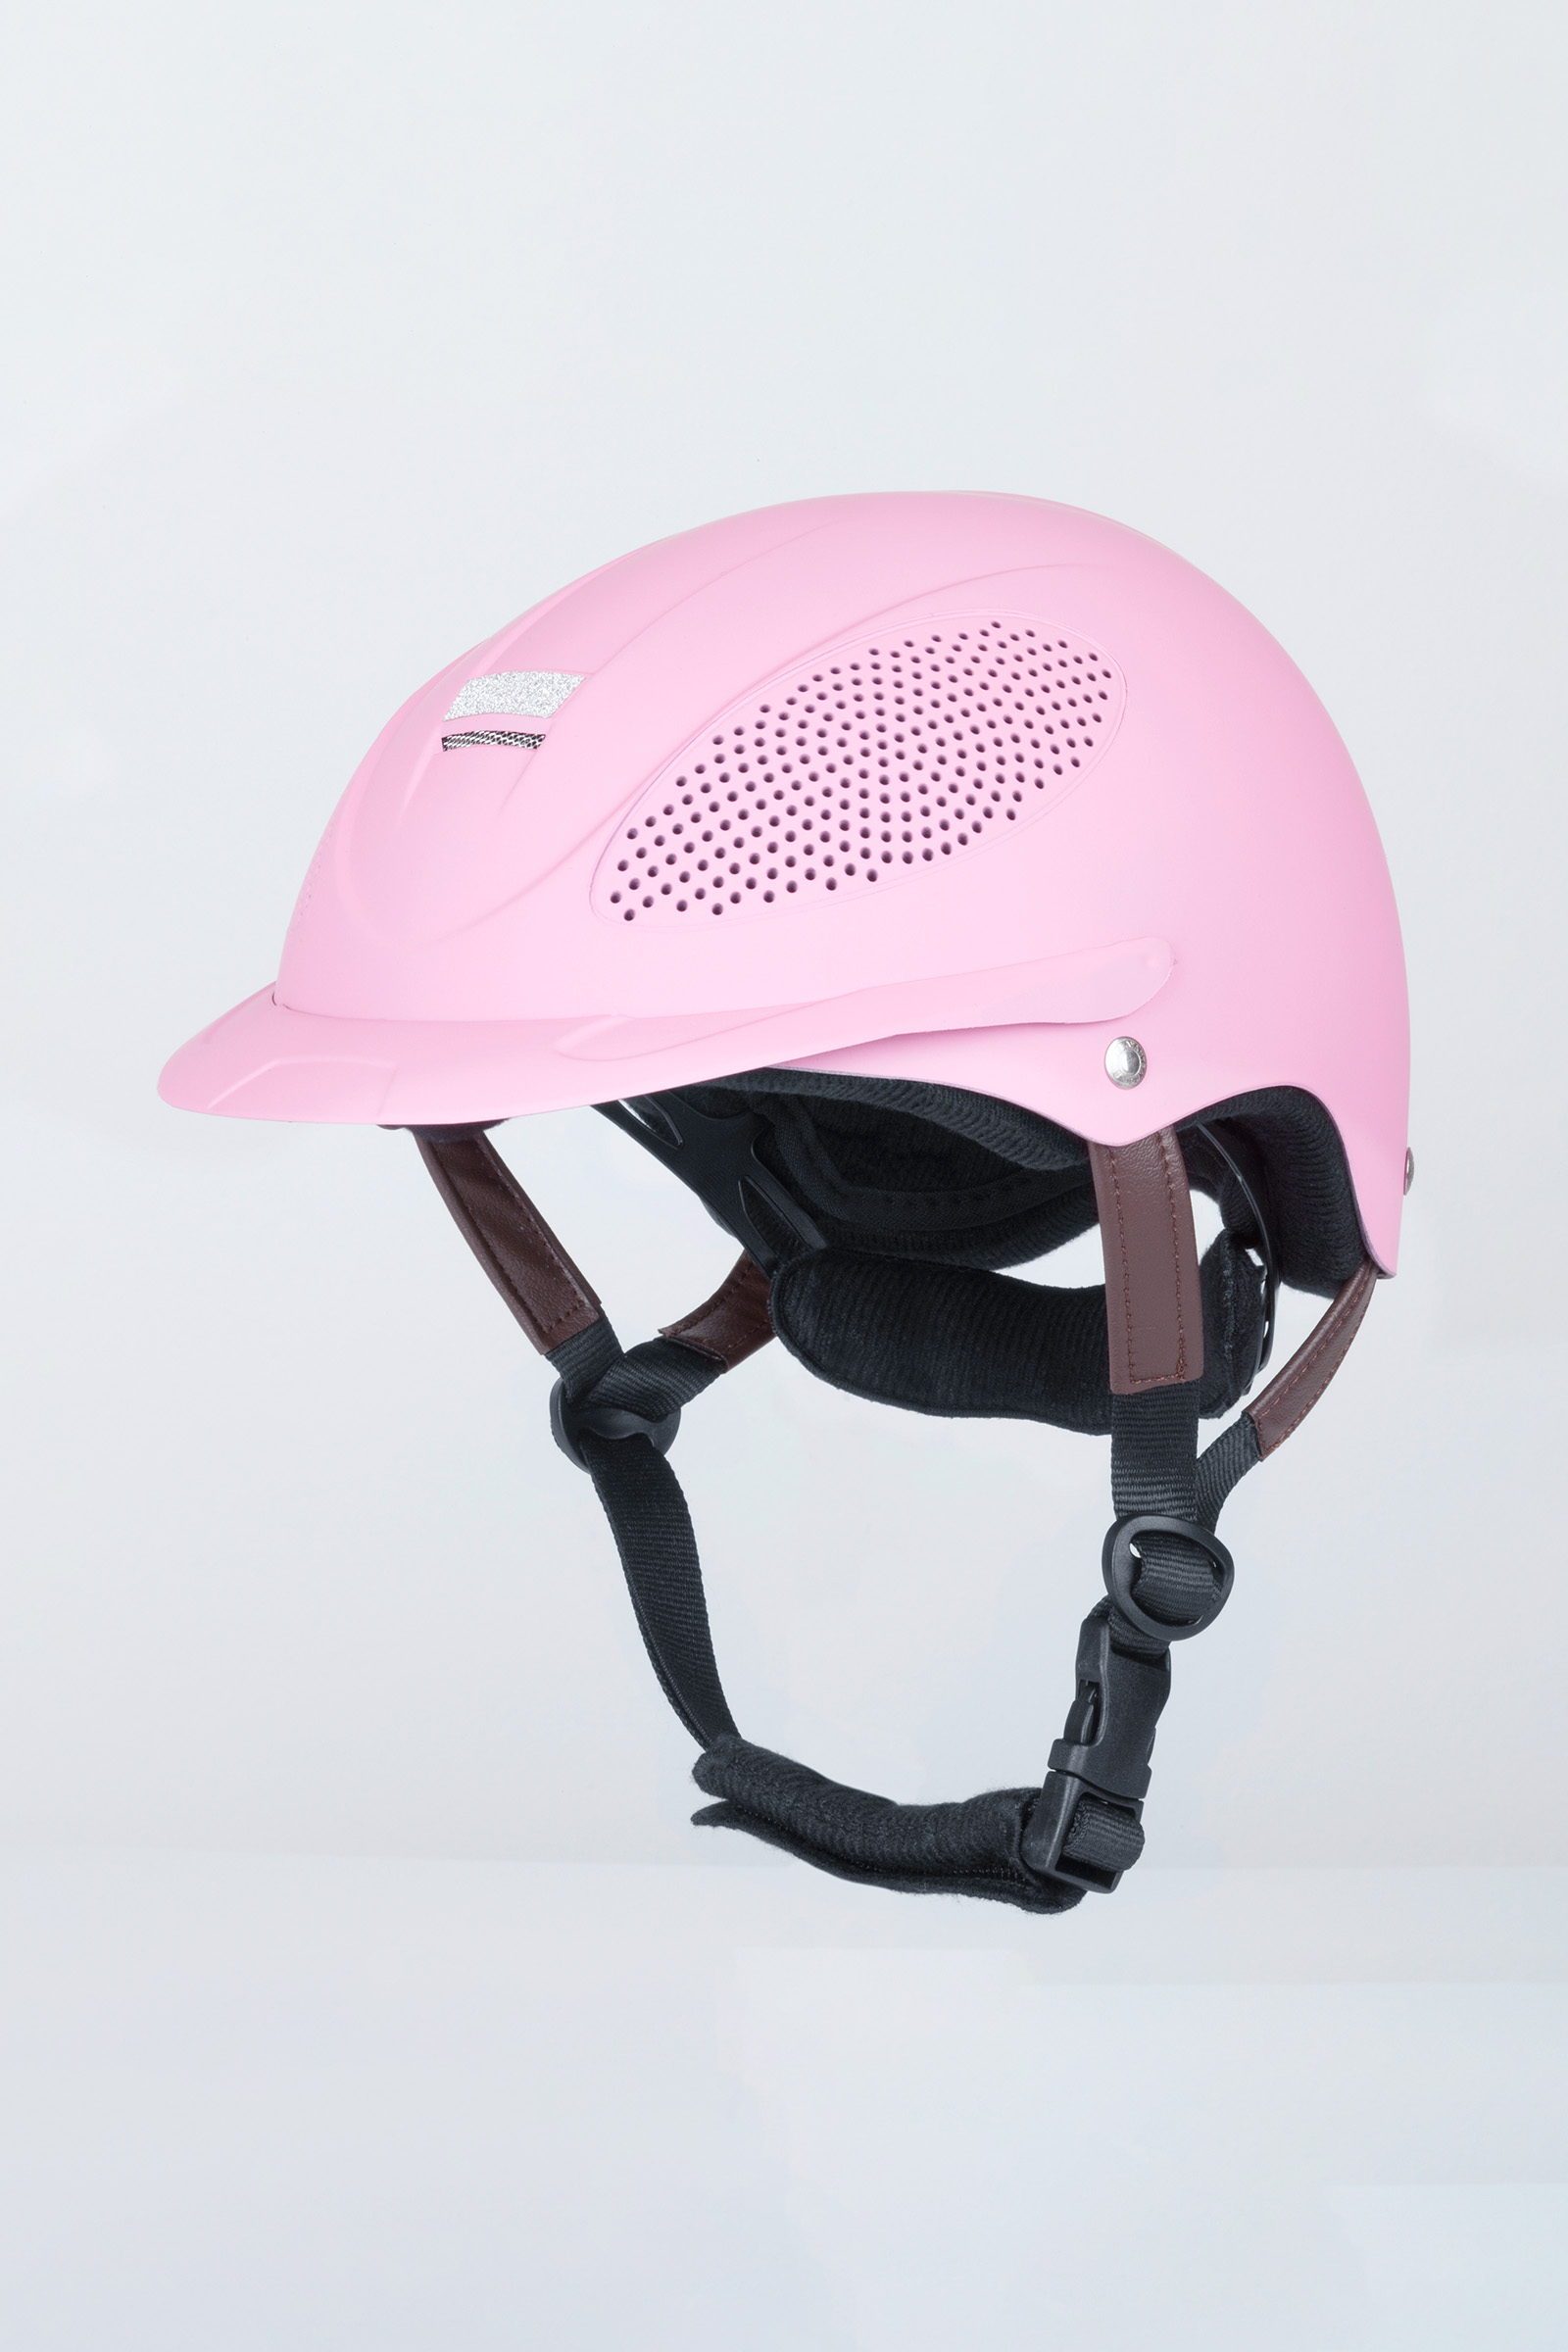 Gaseoso taller contar Comprar USG Comfort Training Riding Helmet ahora | horze.es